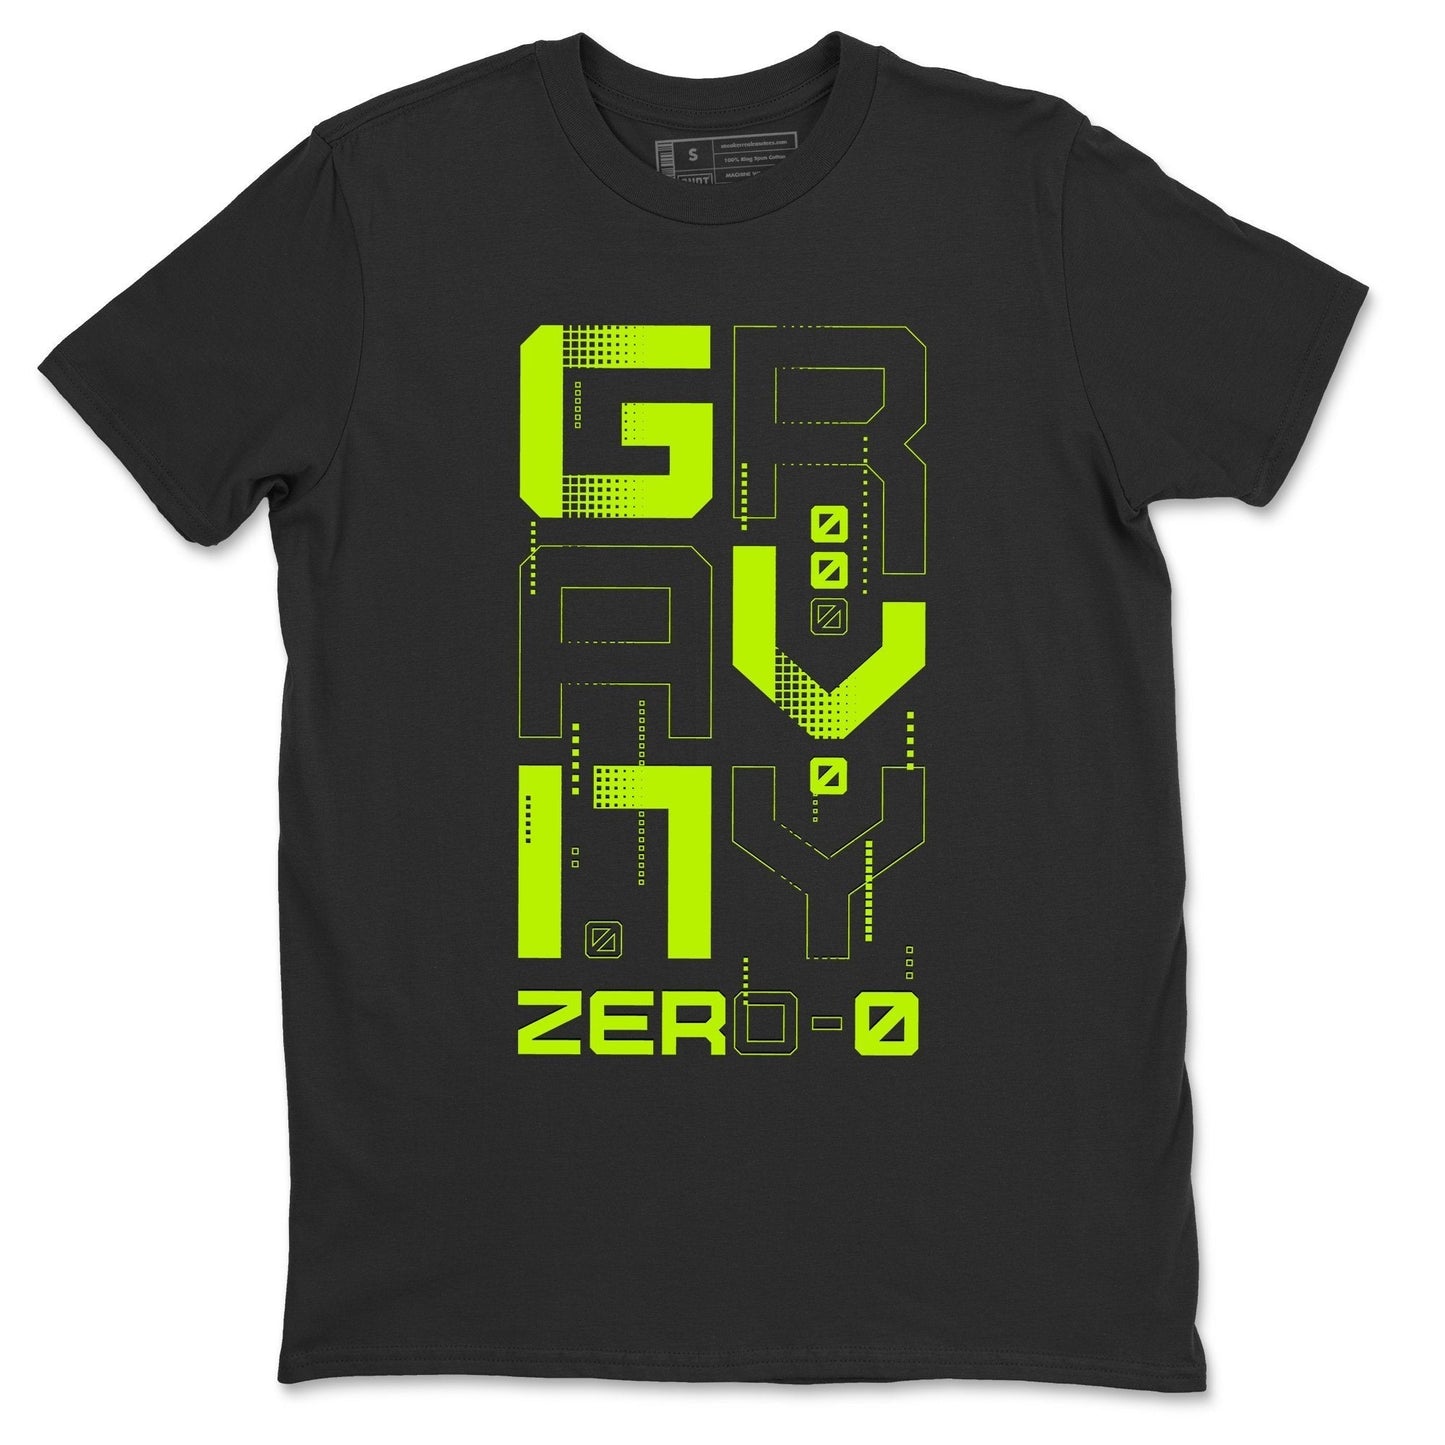 Jordan 6 Electric Green Shirt To Match Jordans Zero Gravity Sneaker Tees Jordan 6 Electric Green Drip Gear Zone Sneaker Matching Clothing Unisex Shirts